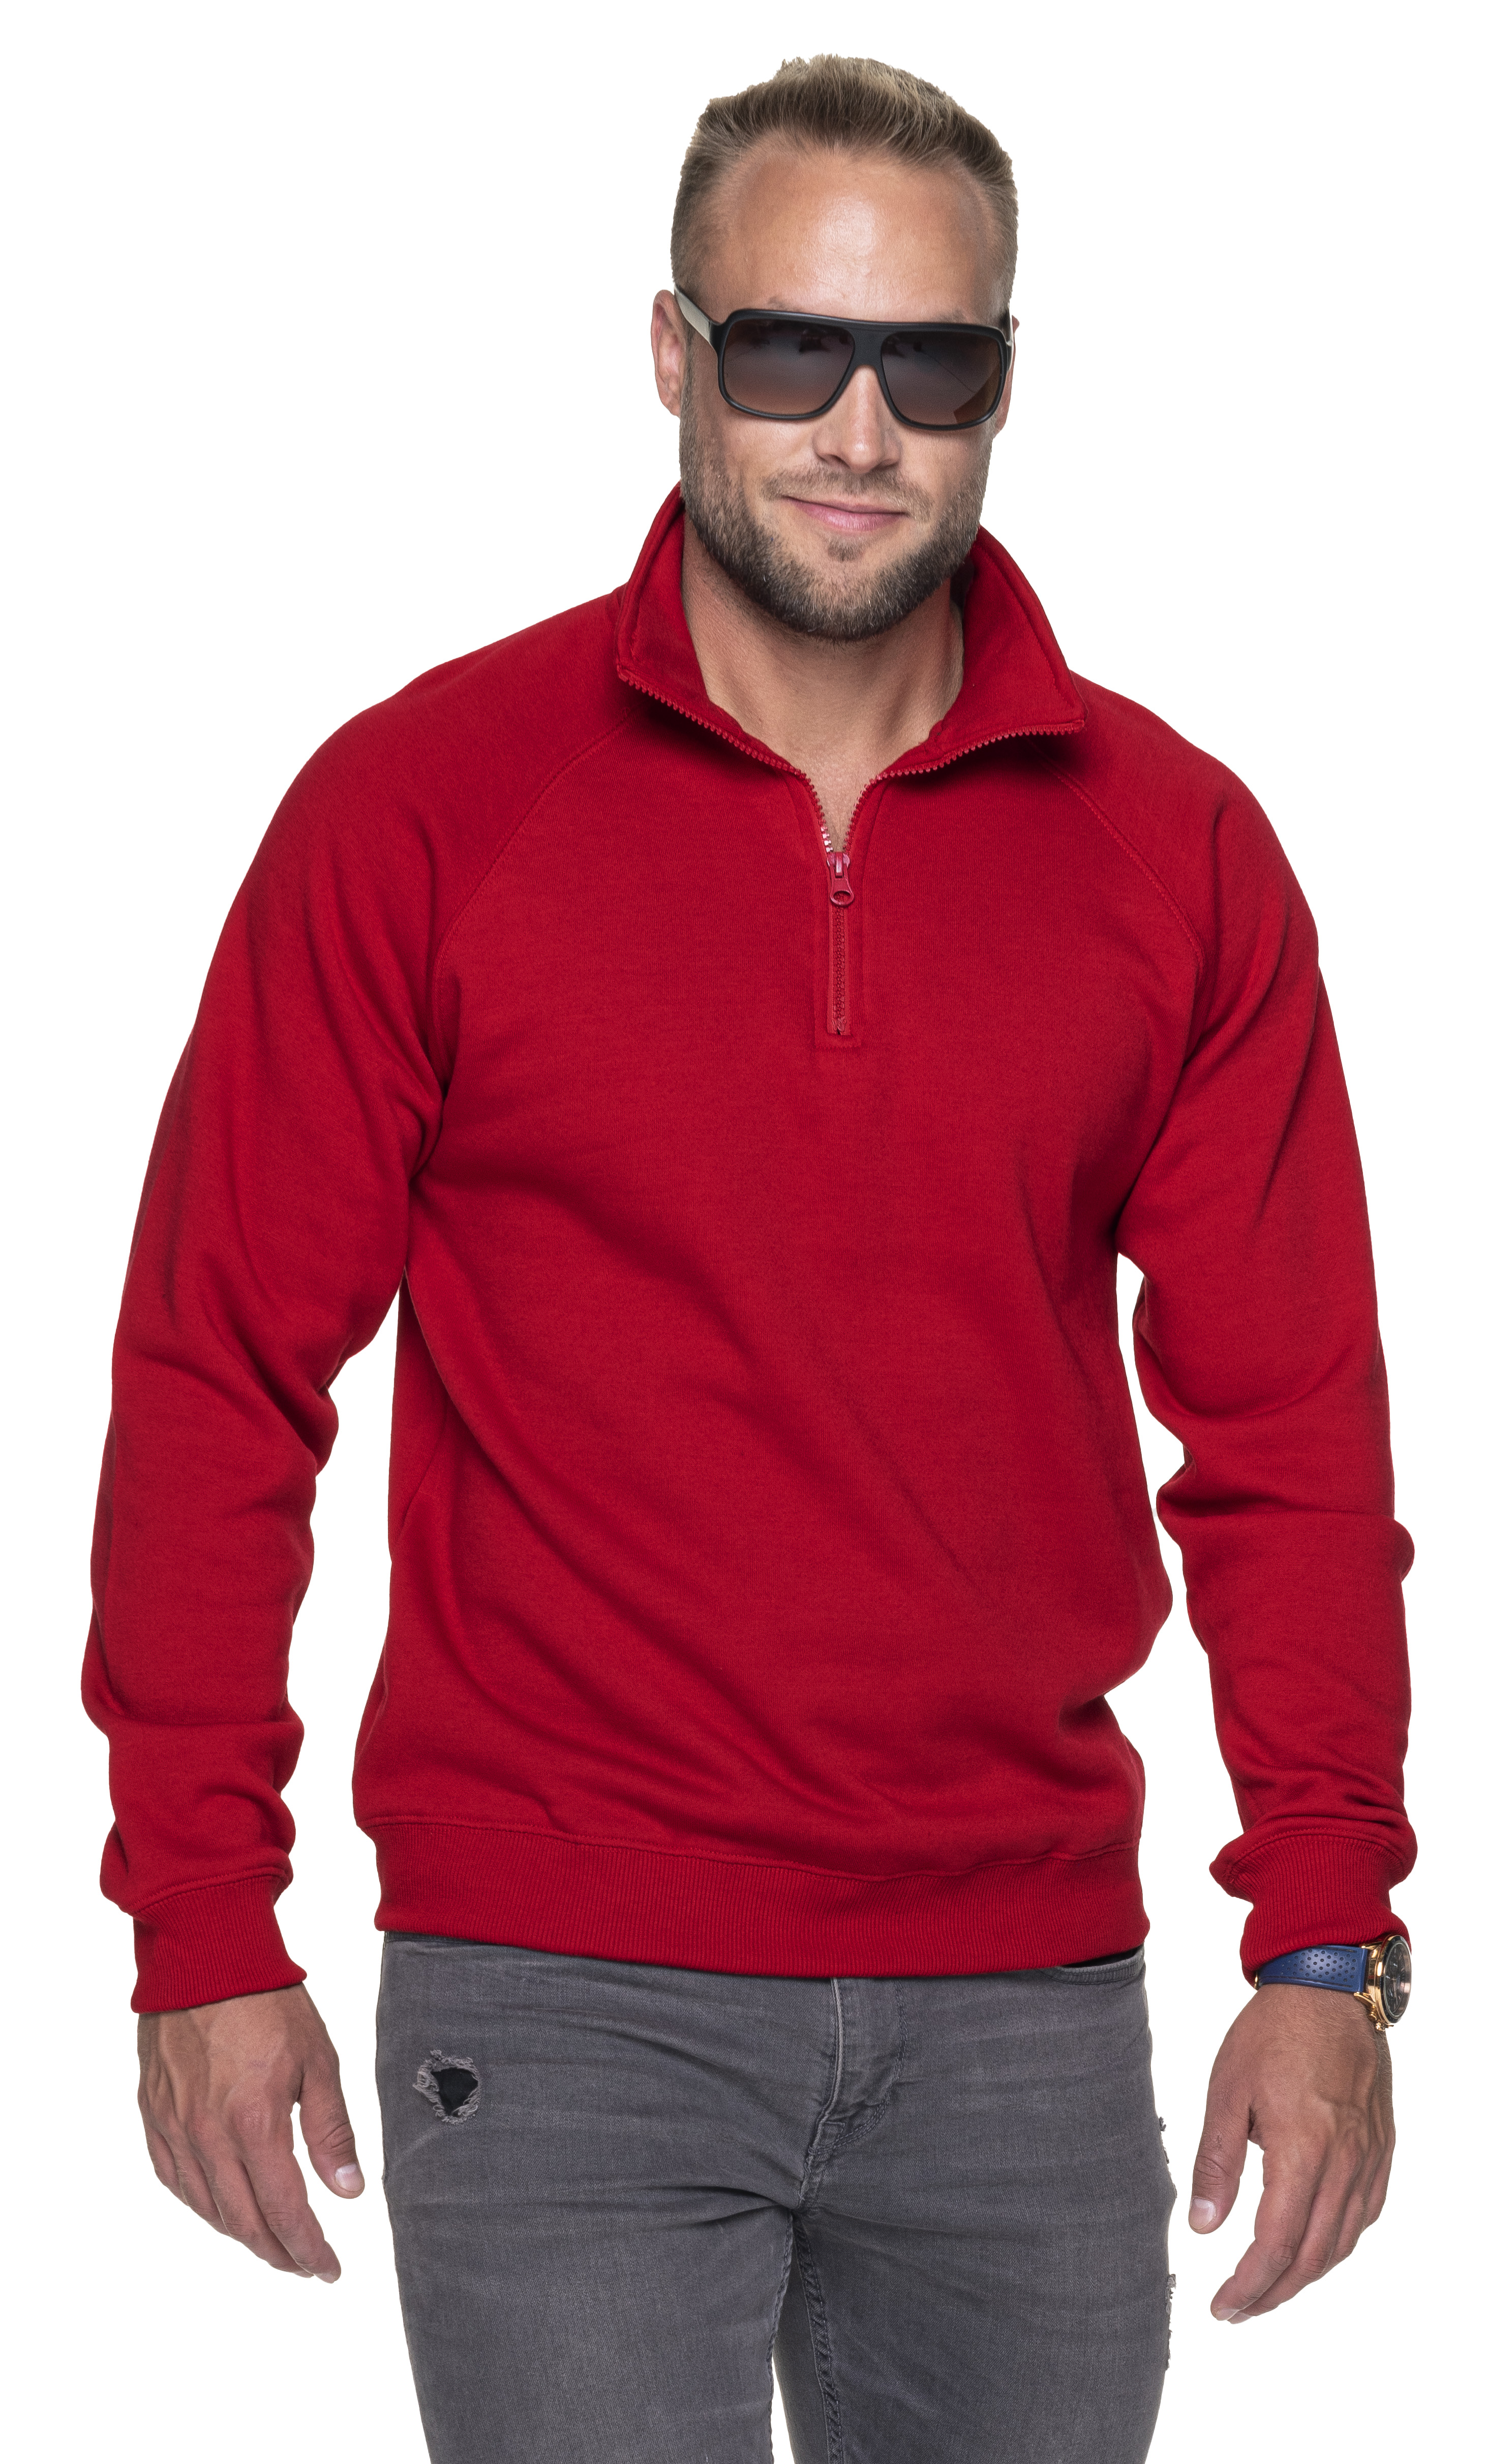 Bluza męska Promostars Zipper - czerwona